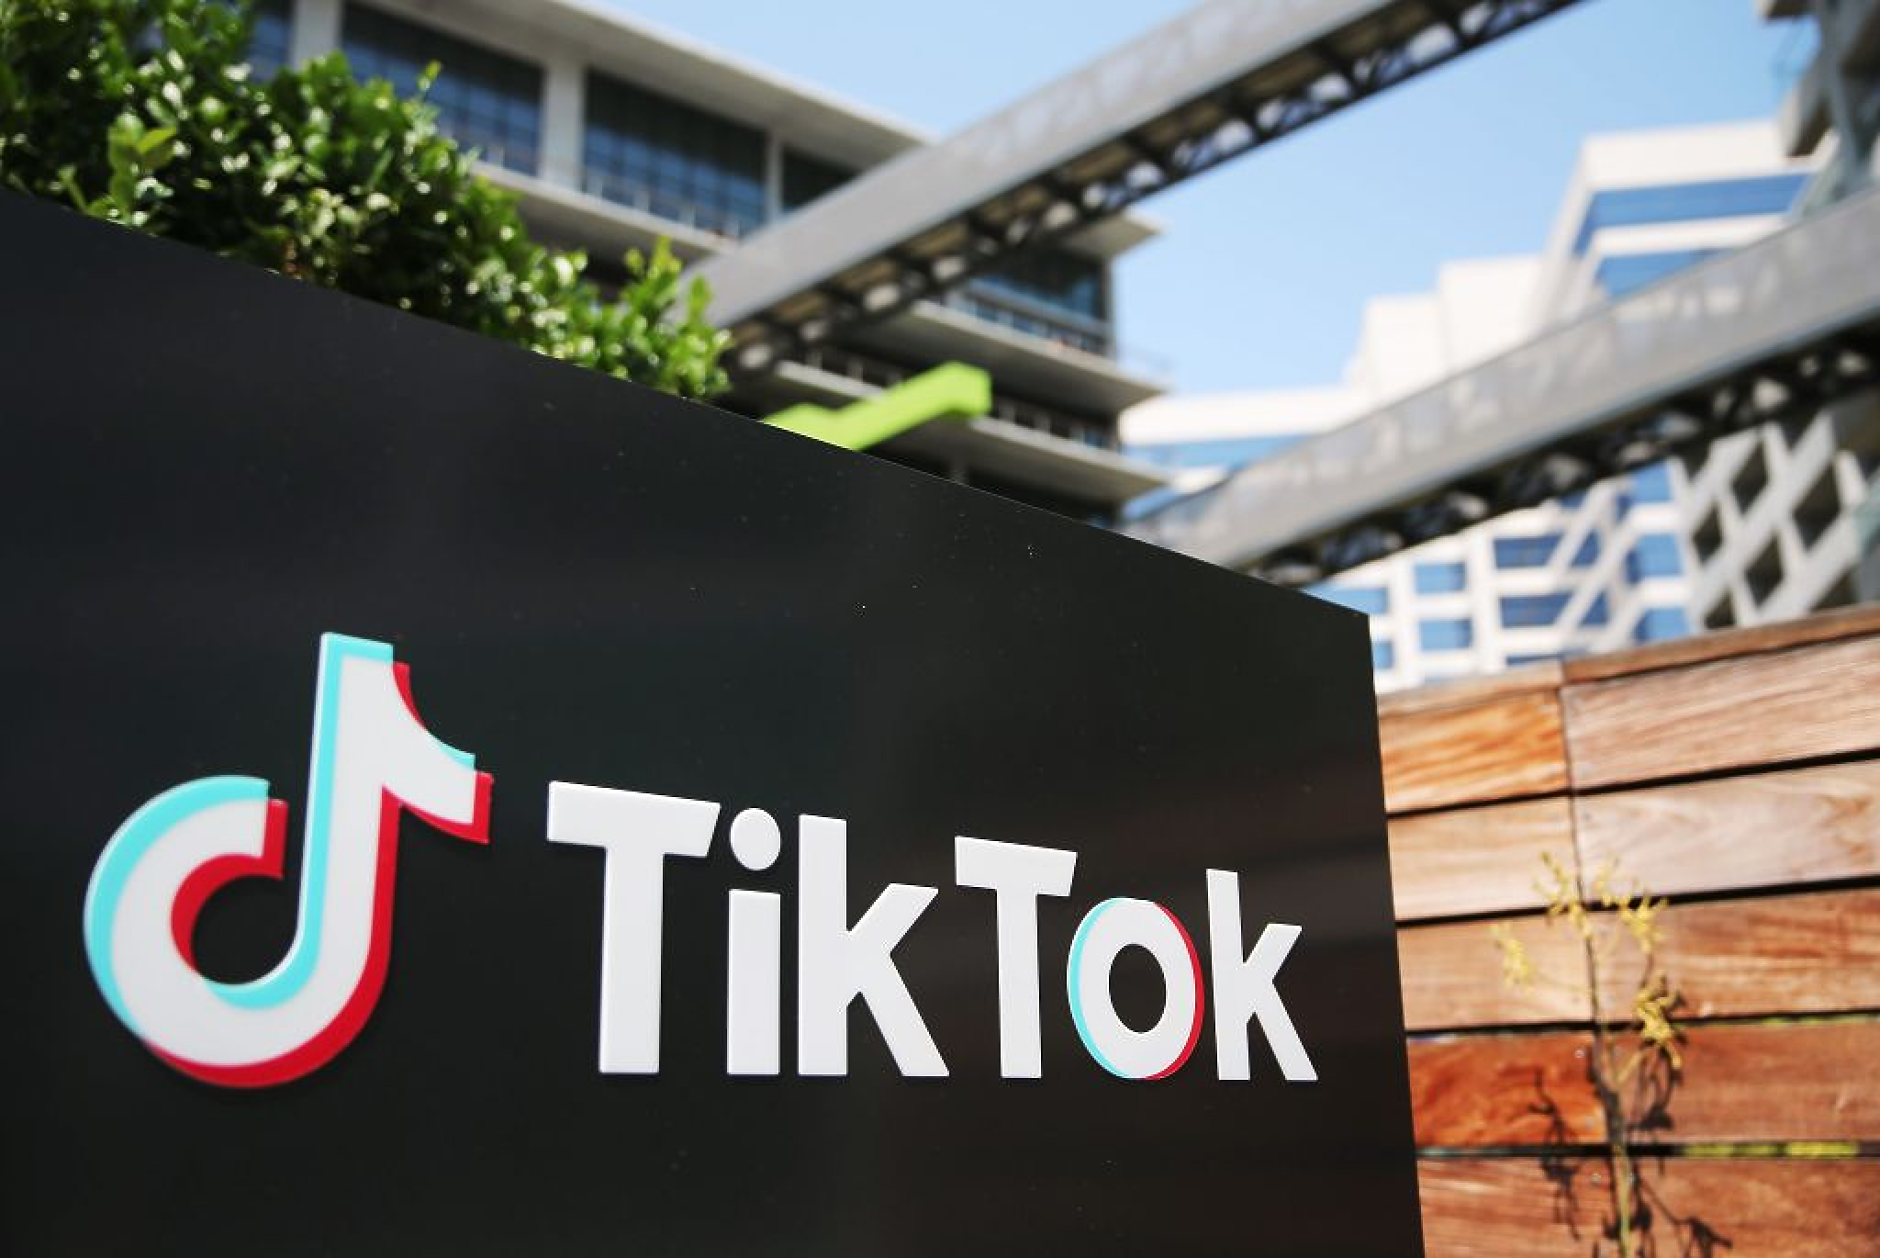 TikTok изпревари Facebook и Instagram по приходи в САЩ и Европа